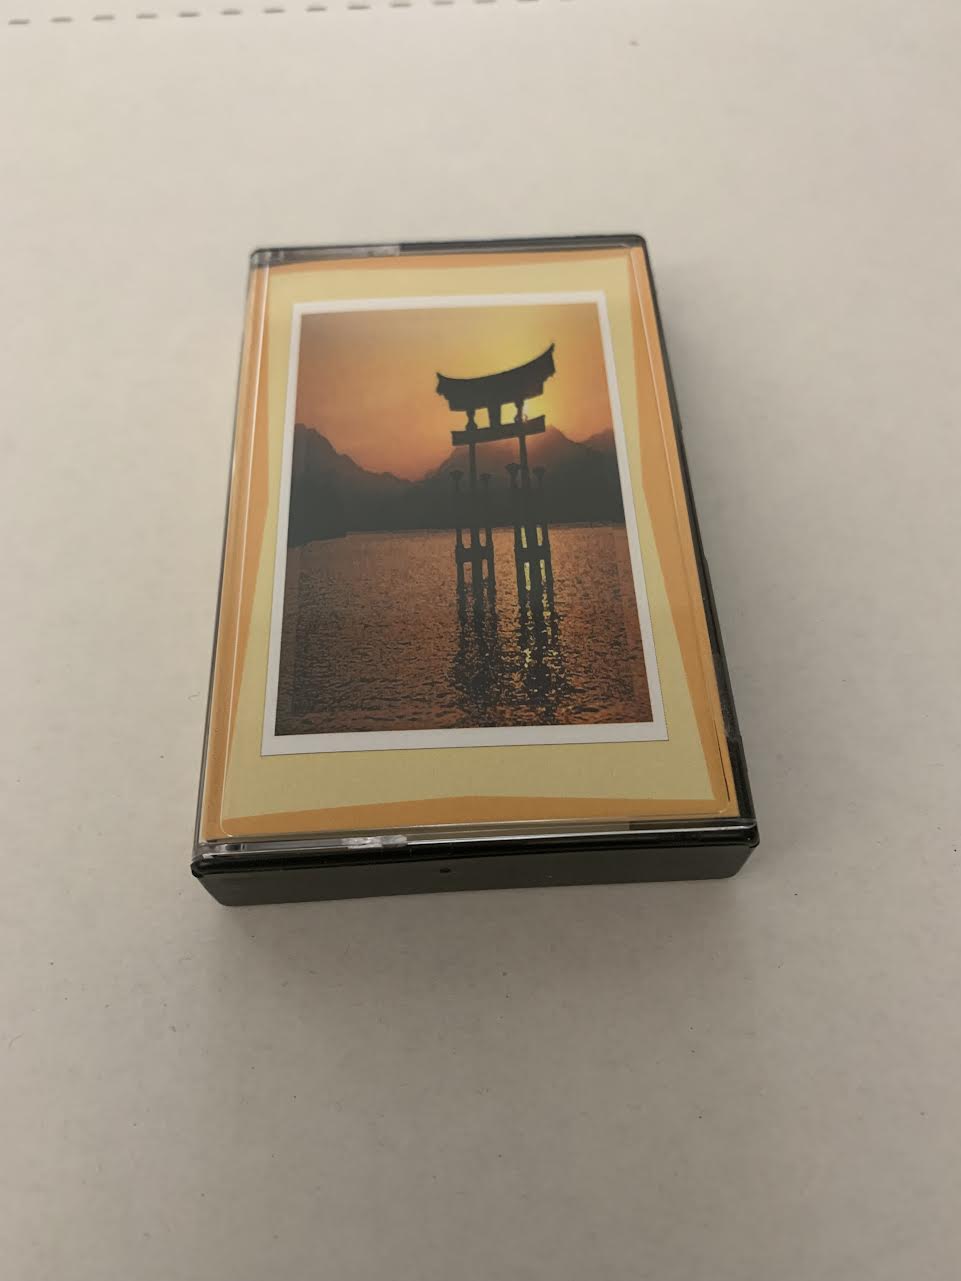 Seikai - III: Sunrise & Sunset [Melodic Ambient] (Mystic Timbre - Tape - 8/4/19)